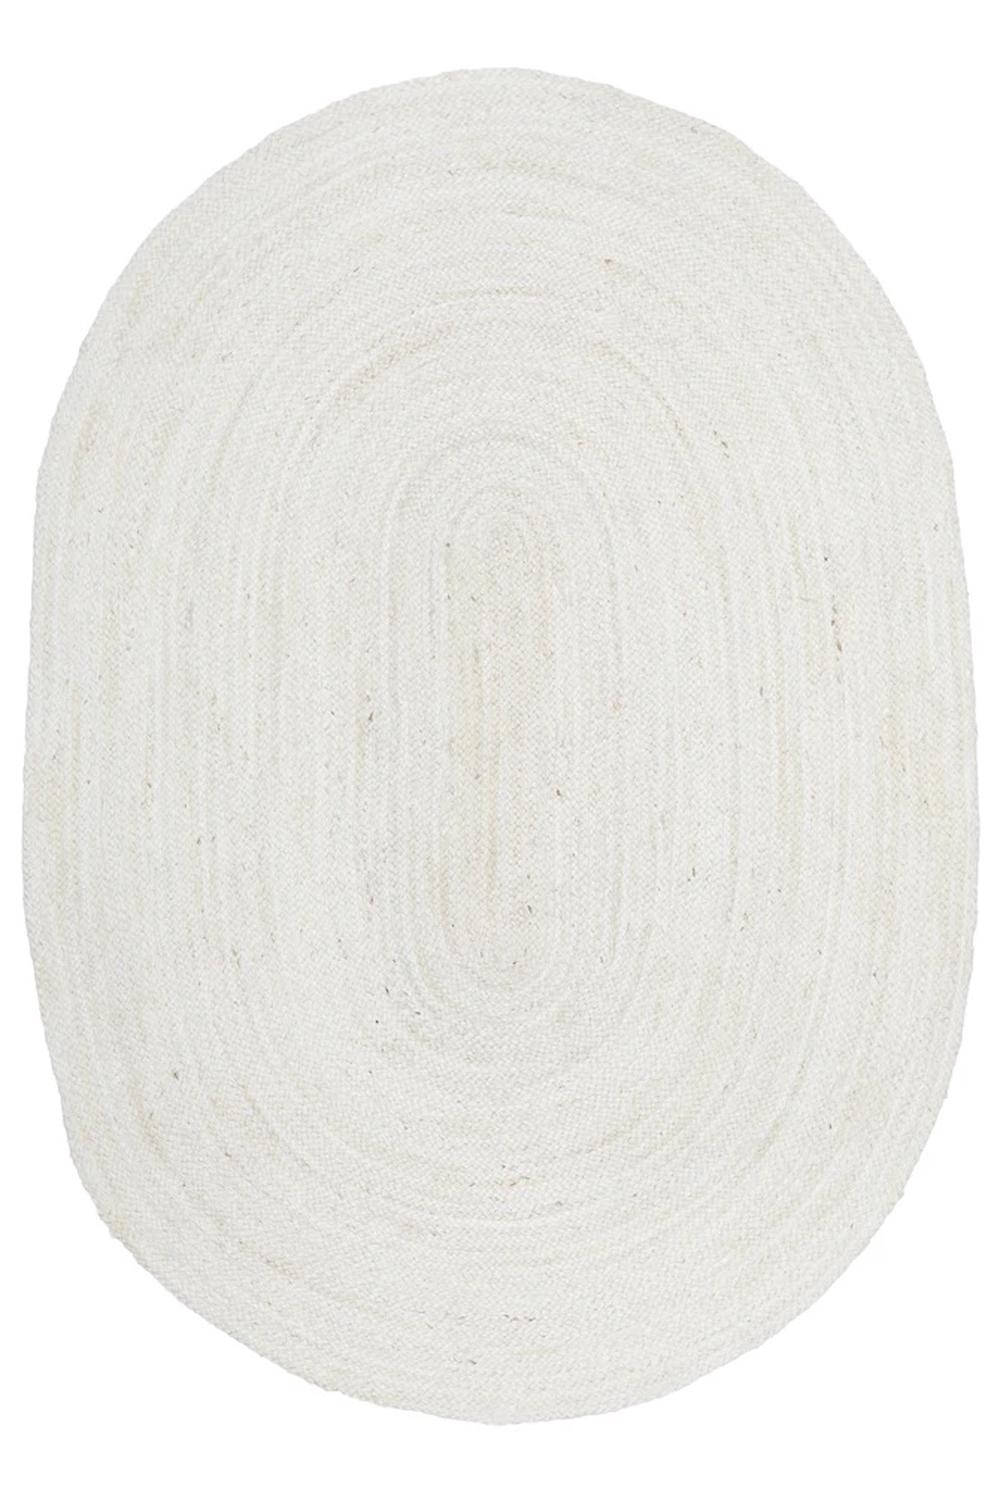 Rug Culture Bondi Jute Oval Rug (White) - 280x190cm